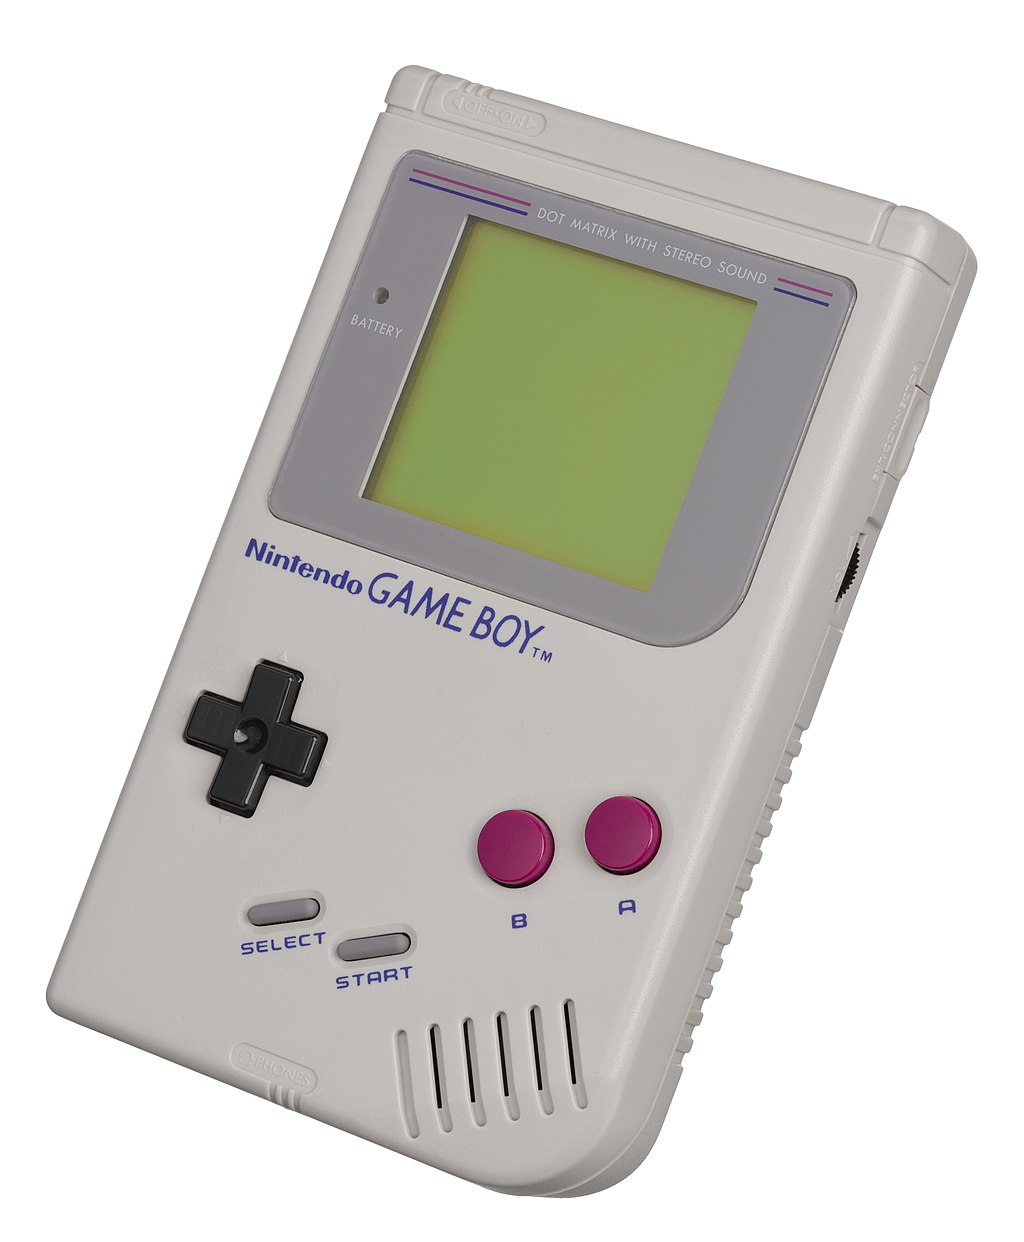 Let's Write a Game Boy Emulator in Python • Inspired Python